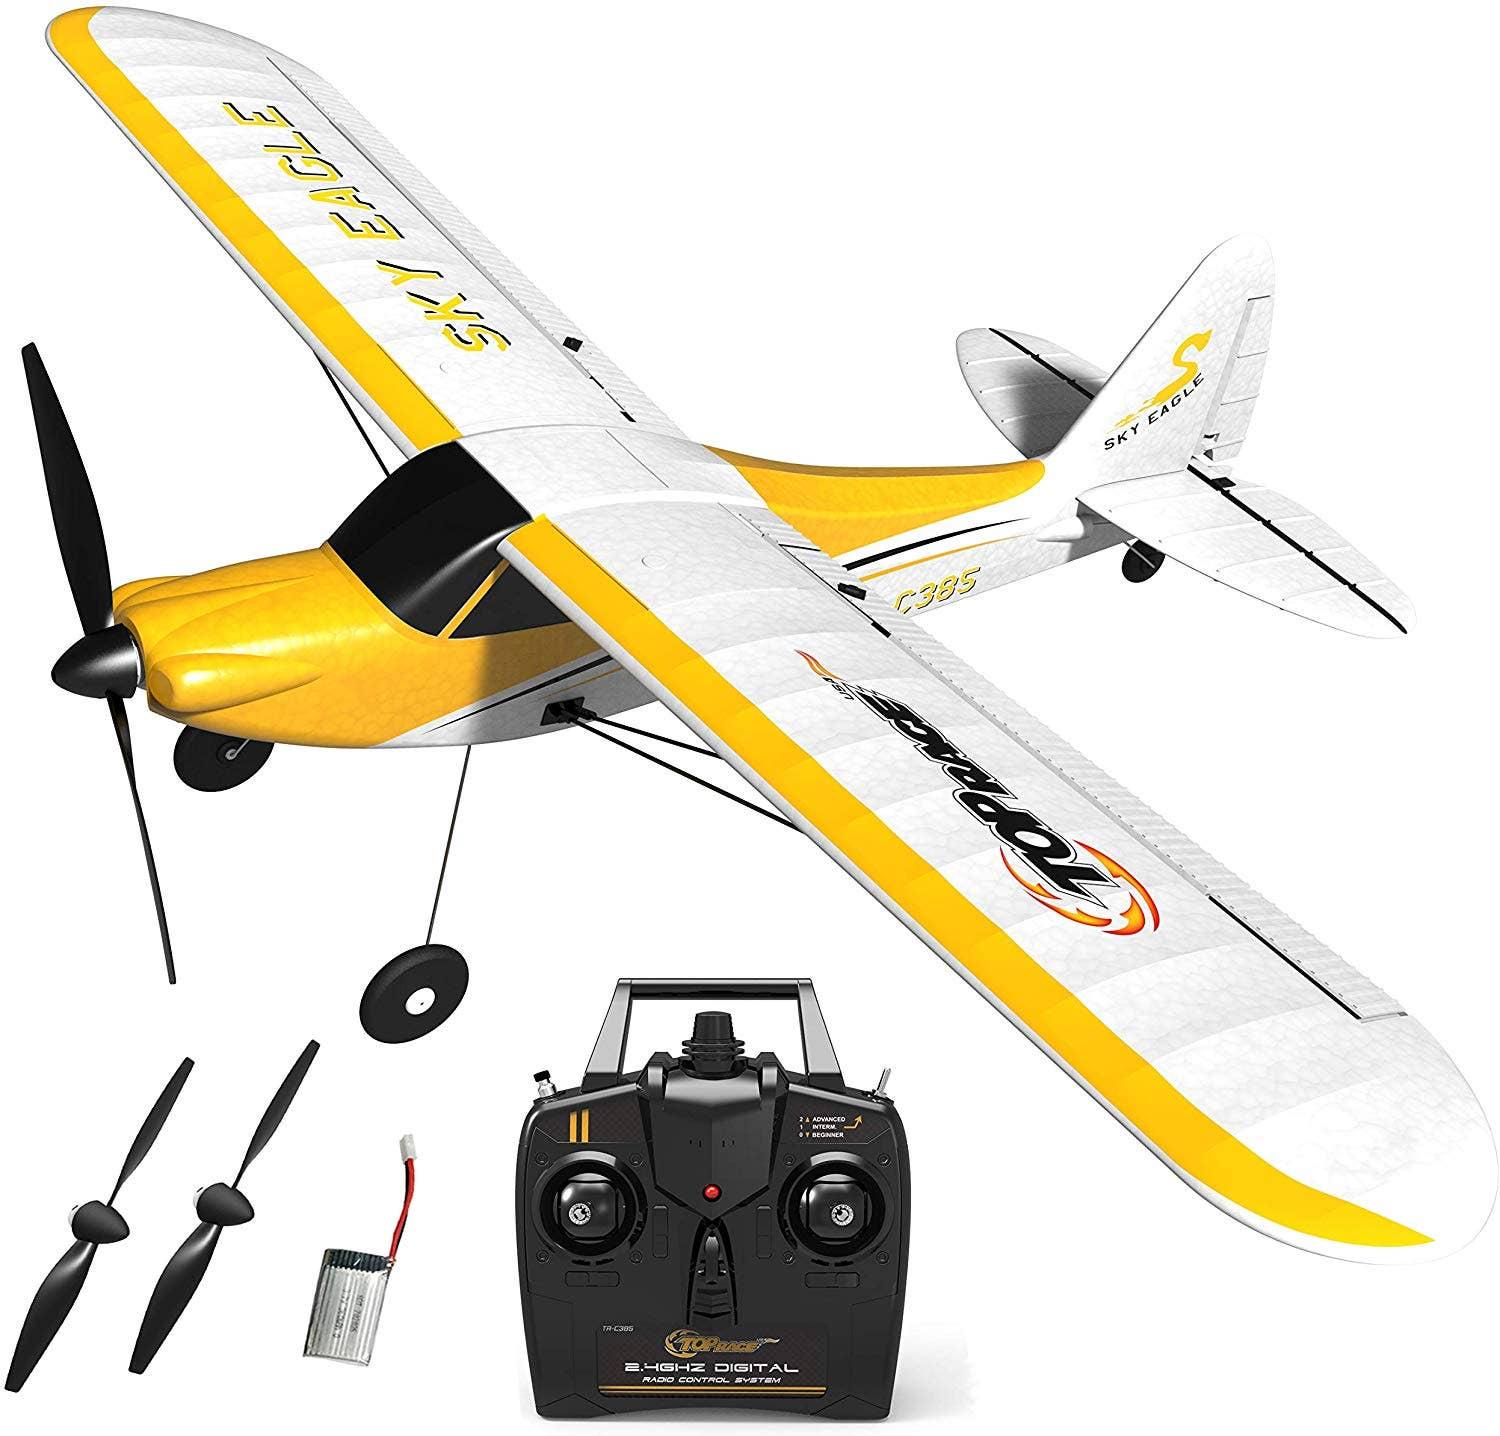 Sky Eagle Tr C385: Key Benefits of the Sky Eagle TR C385 Drone